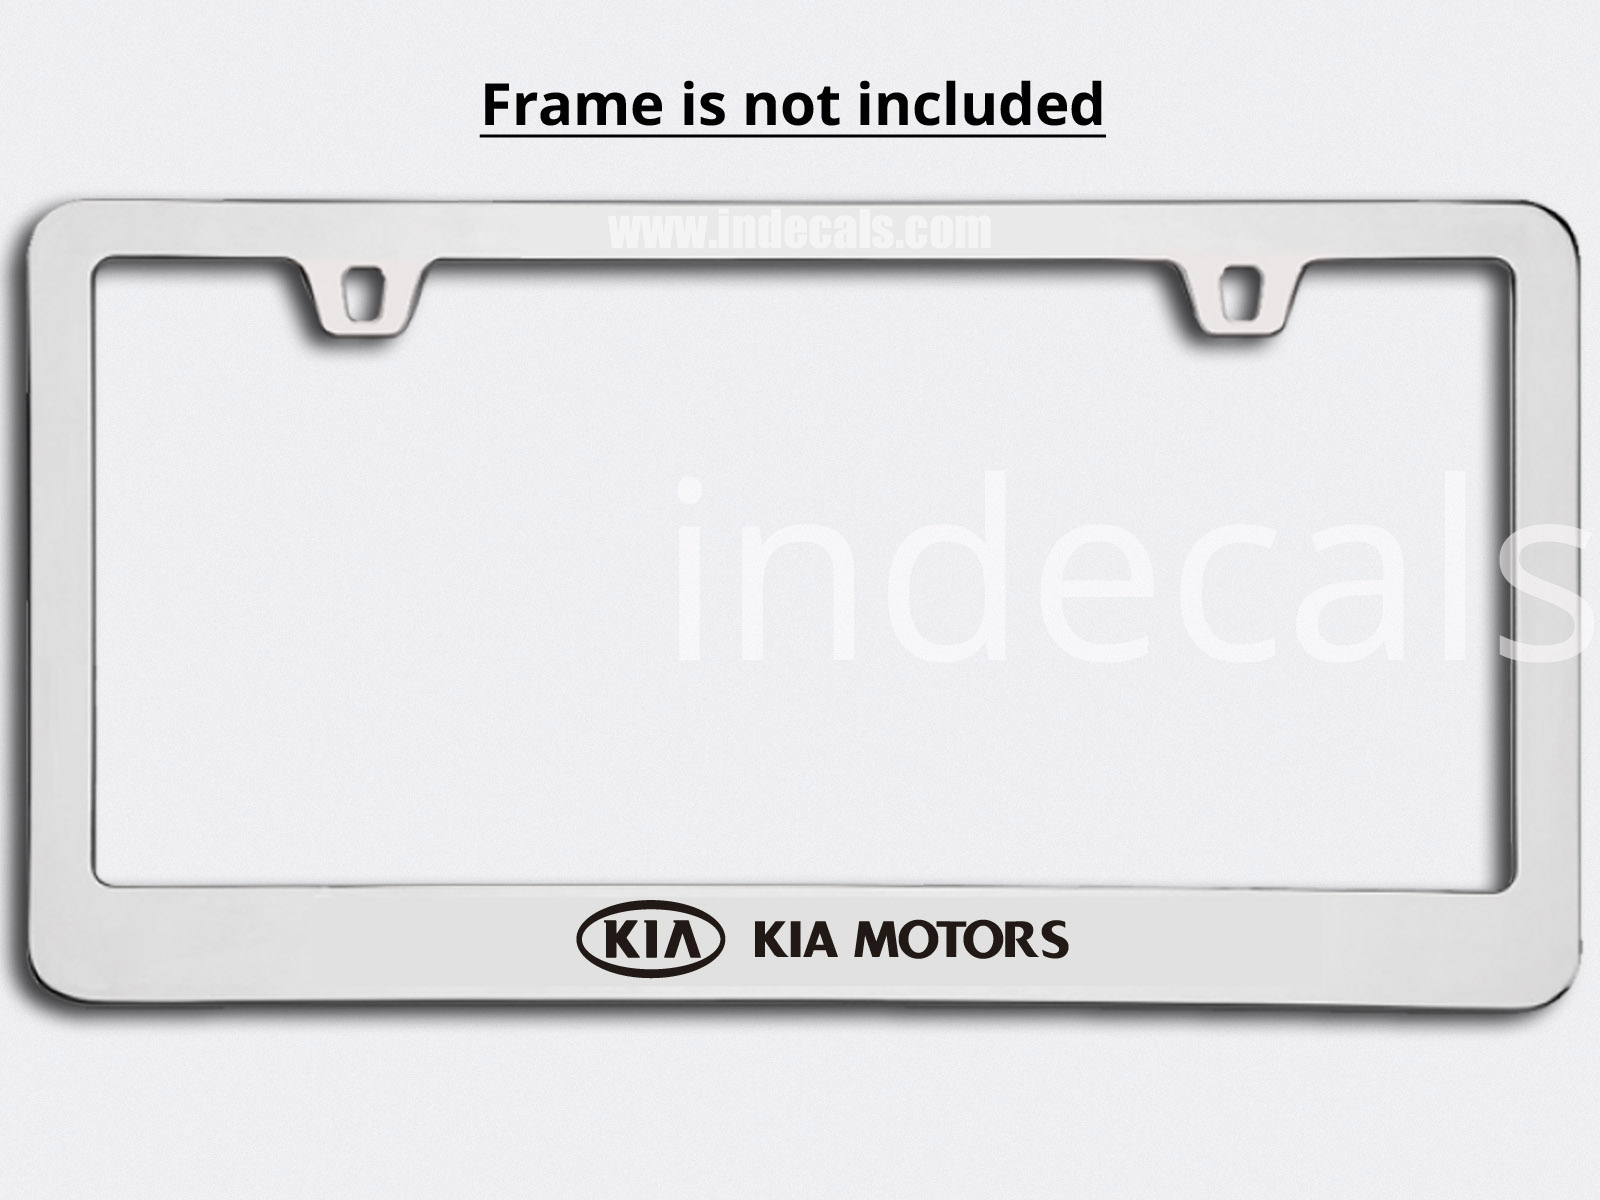 3 x Kia Stickers for Plate Frame - Black